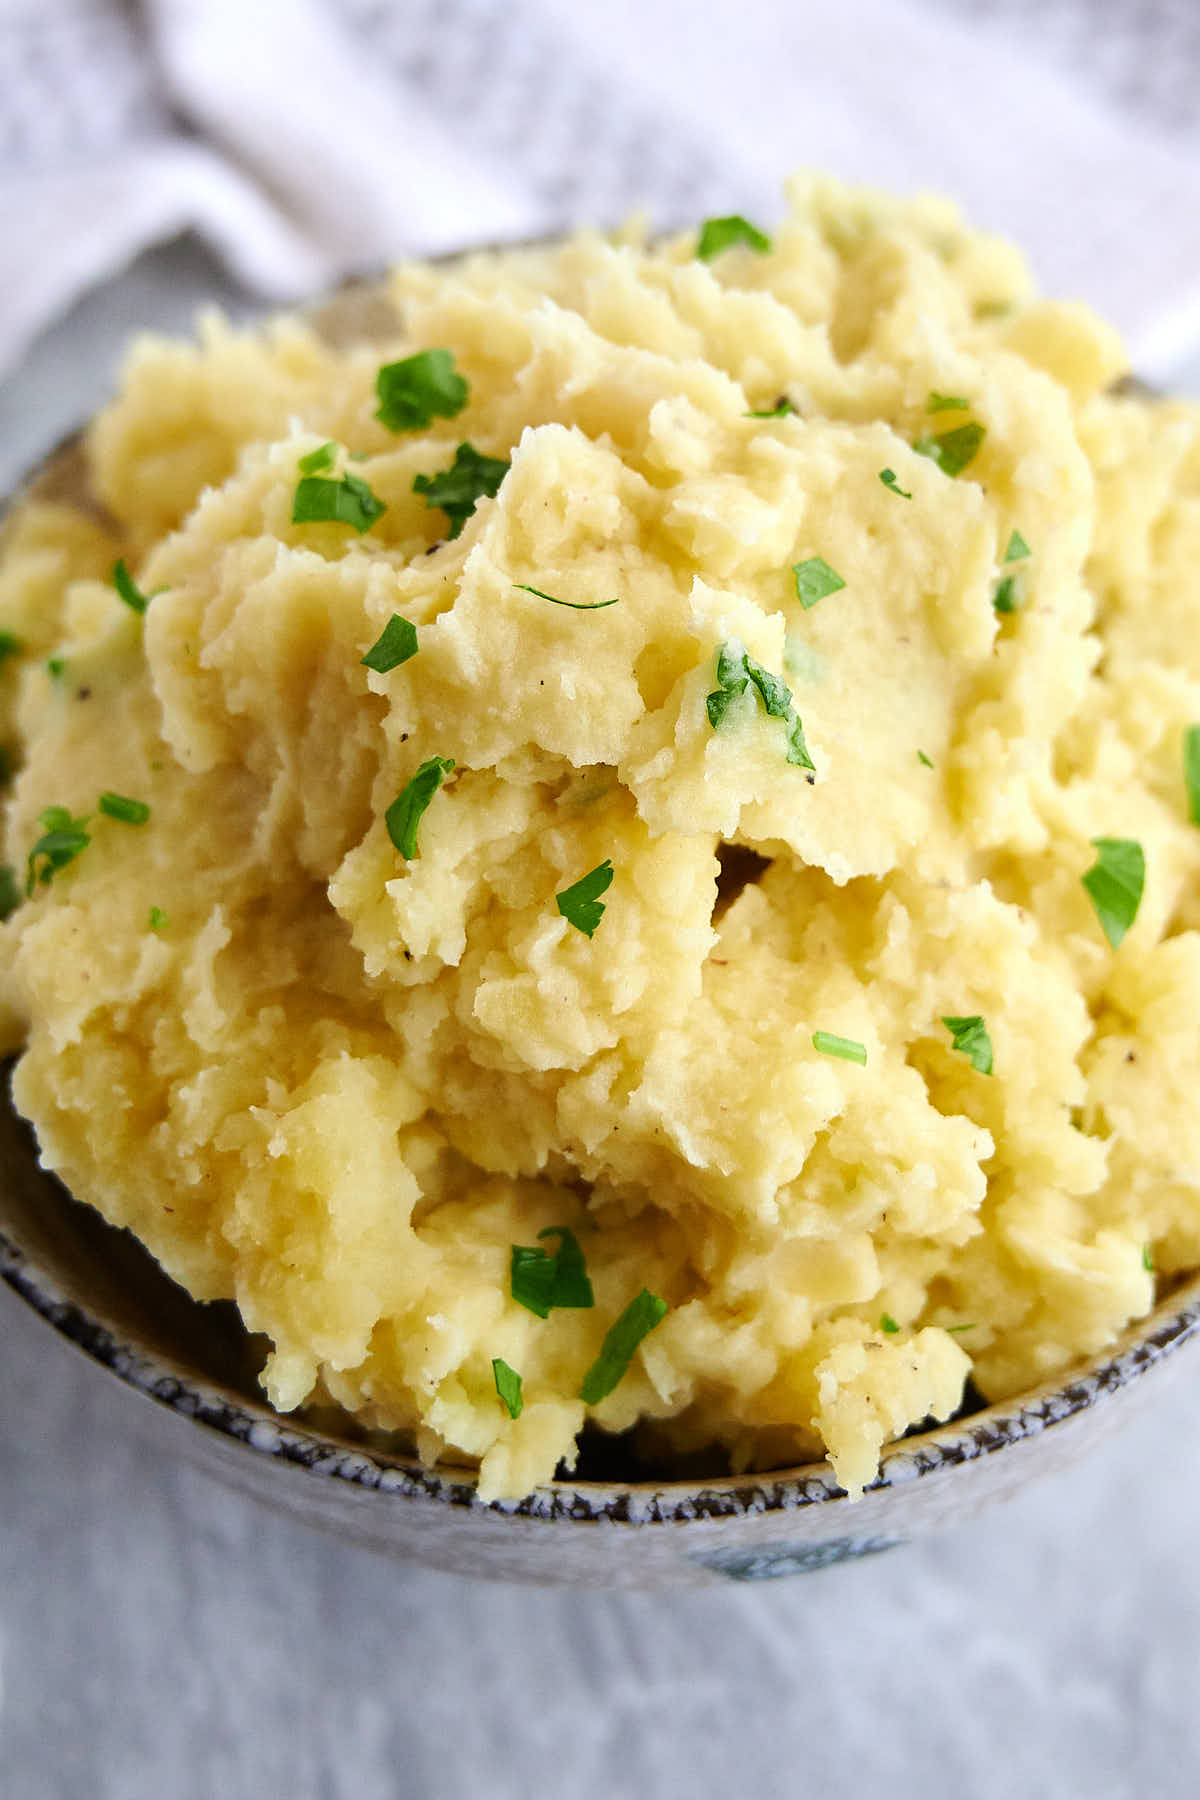 Mashed Potatoes In Spanish / Easy Mashed Potatoes - Closet Cooking : Mashed potatoes, macaroni, rice pudding.